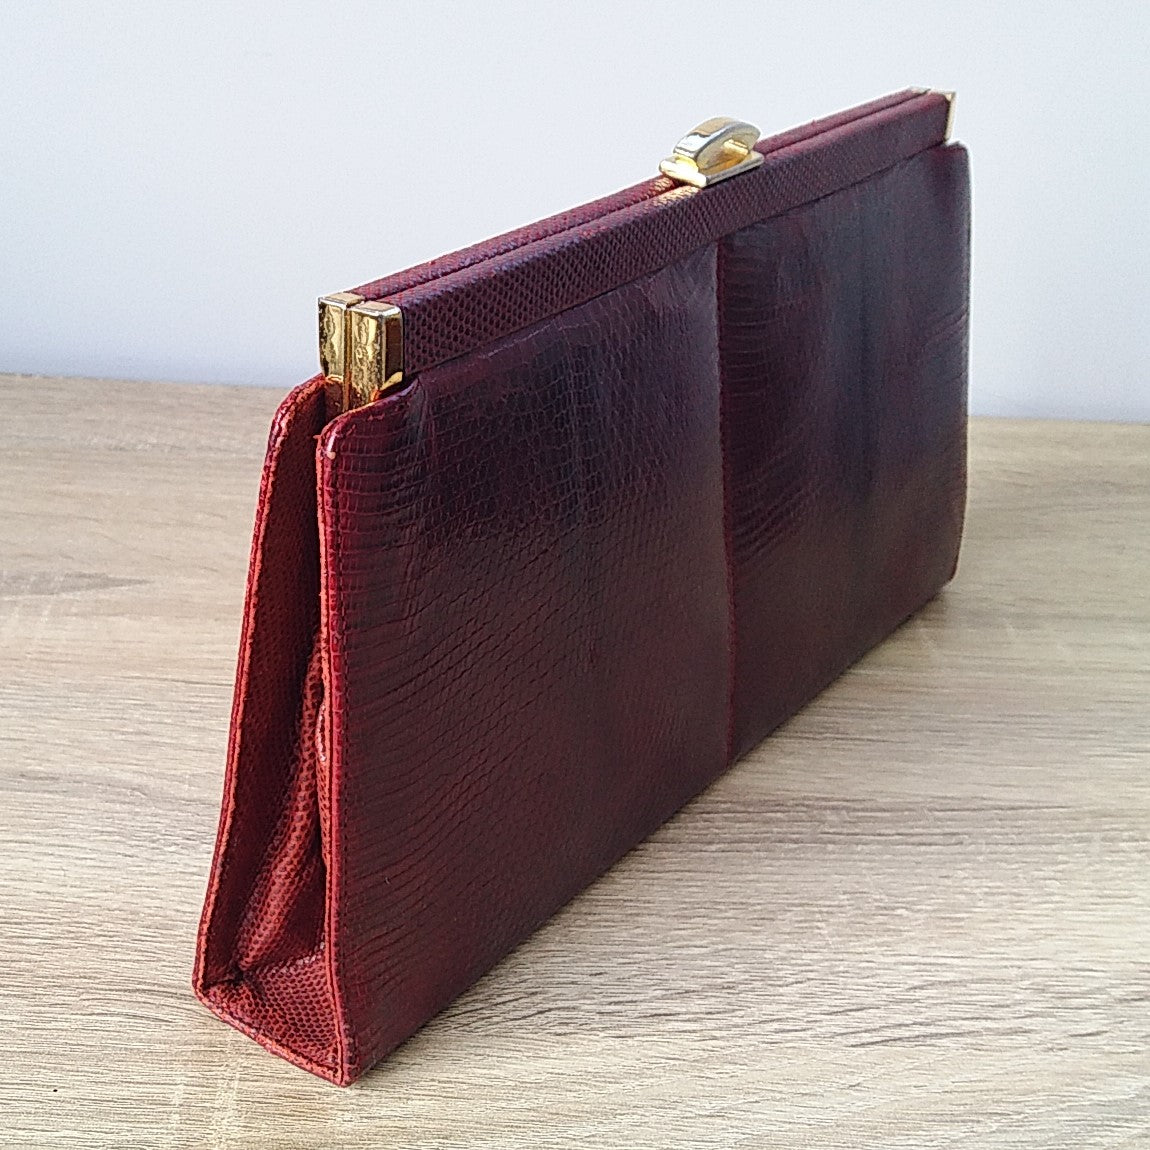 Vintage Bag - Red Lizard Leather Clutch